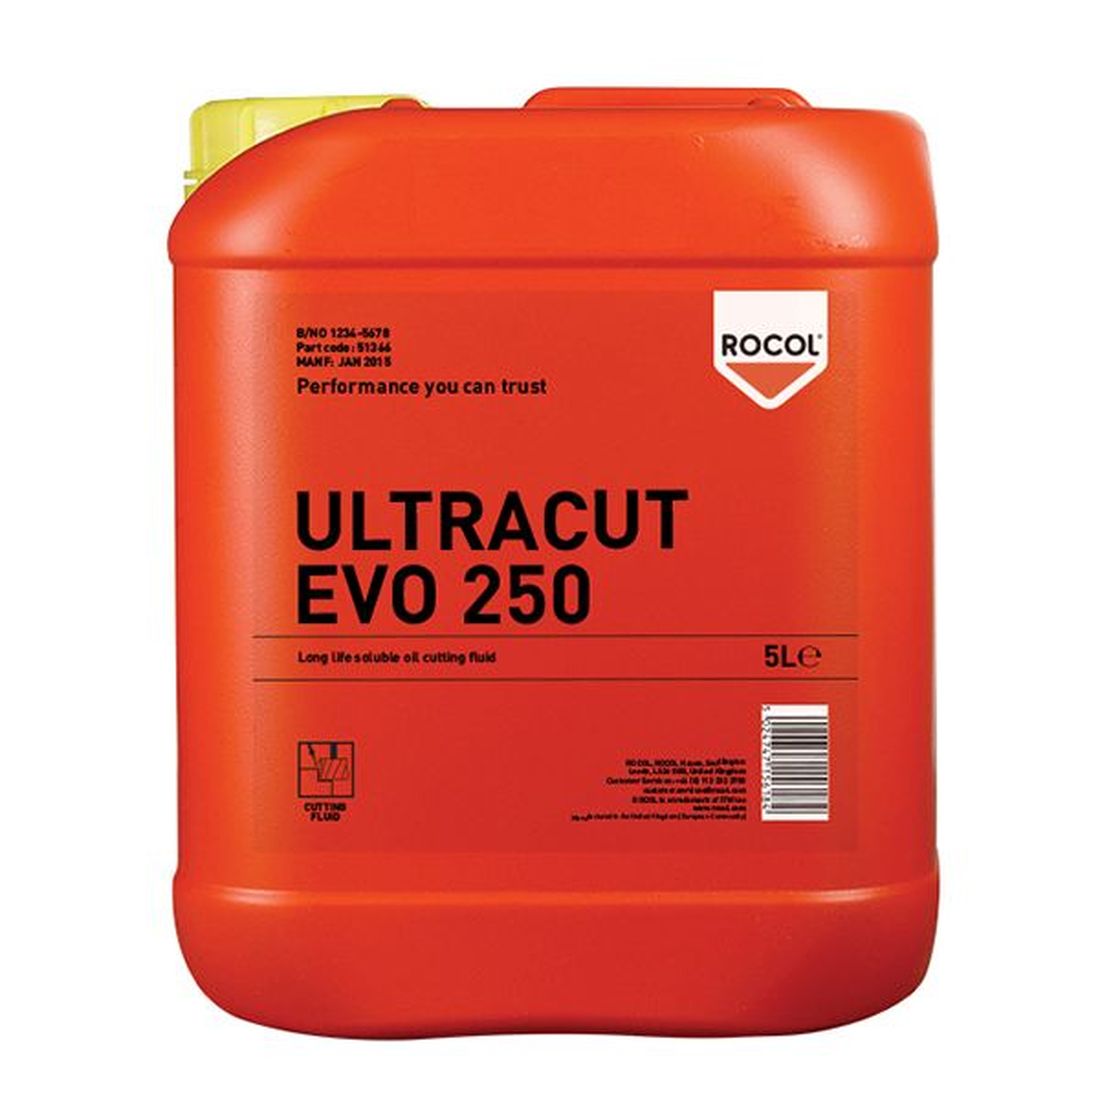 ROCOL ULTRACUT EVO 250 Cutting Fluid 5 litre                                          